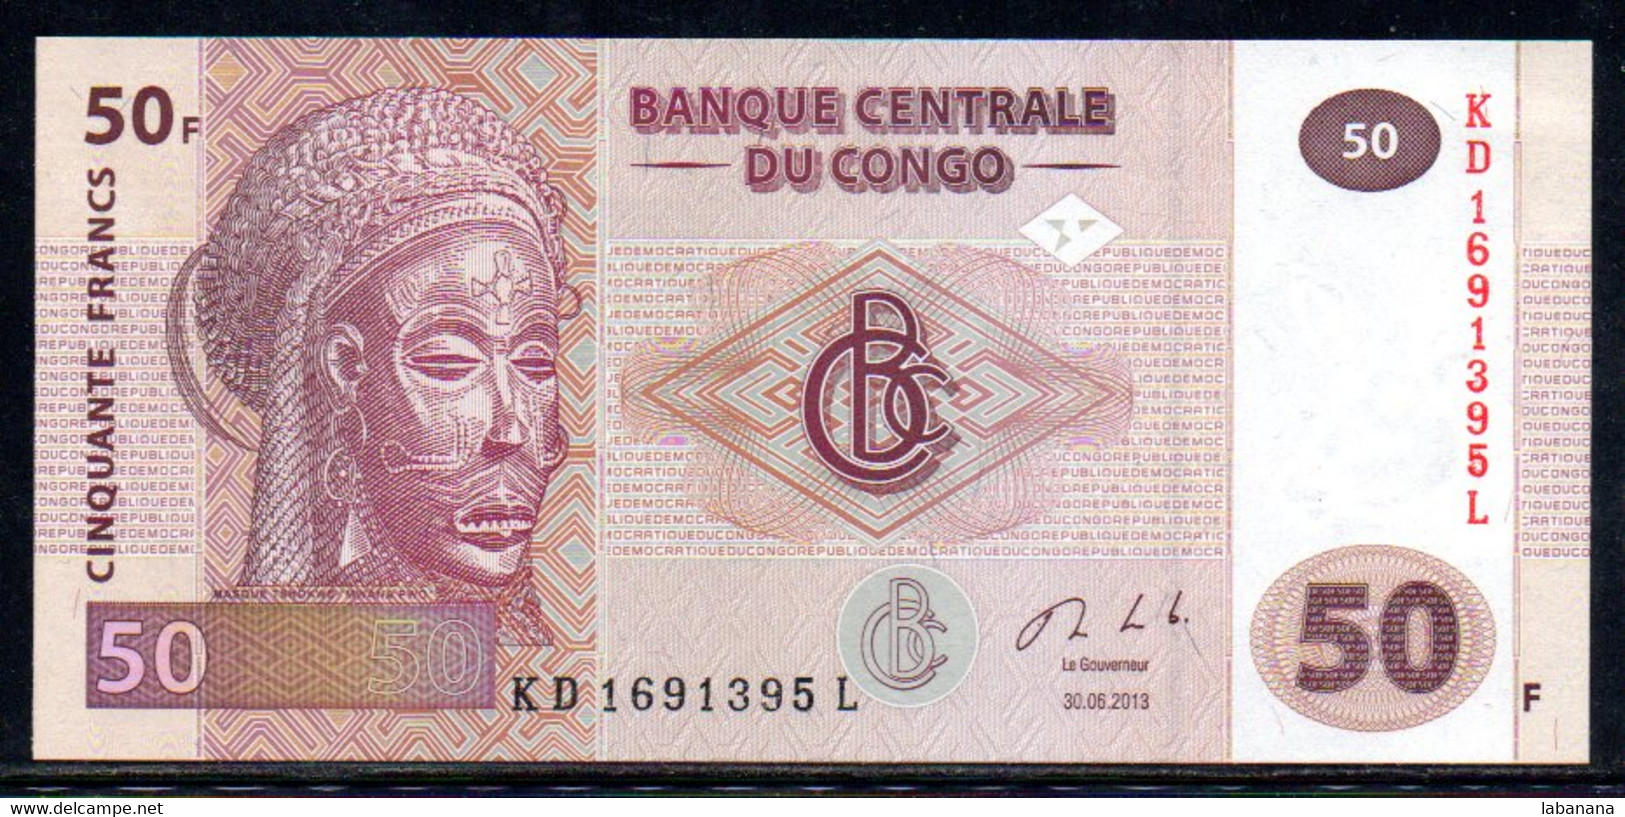 Congo 50fr 2013 KD169L Neuf - Democratic Republic Of The Congo & Zaire